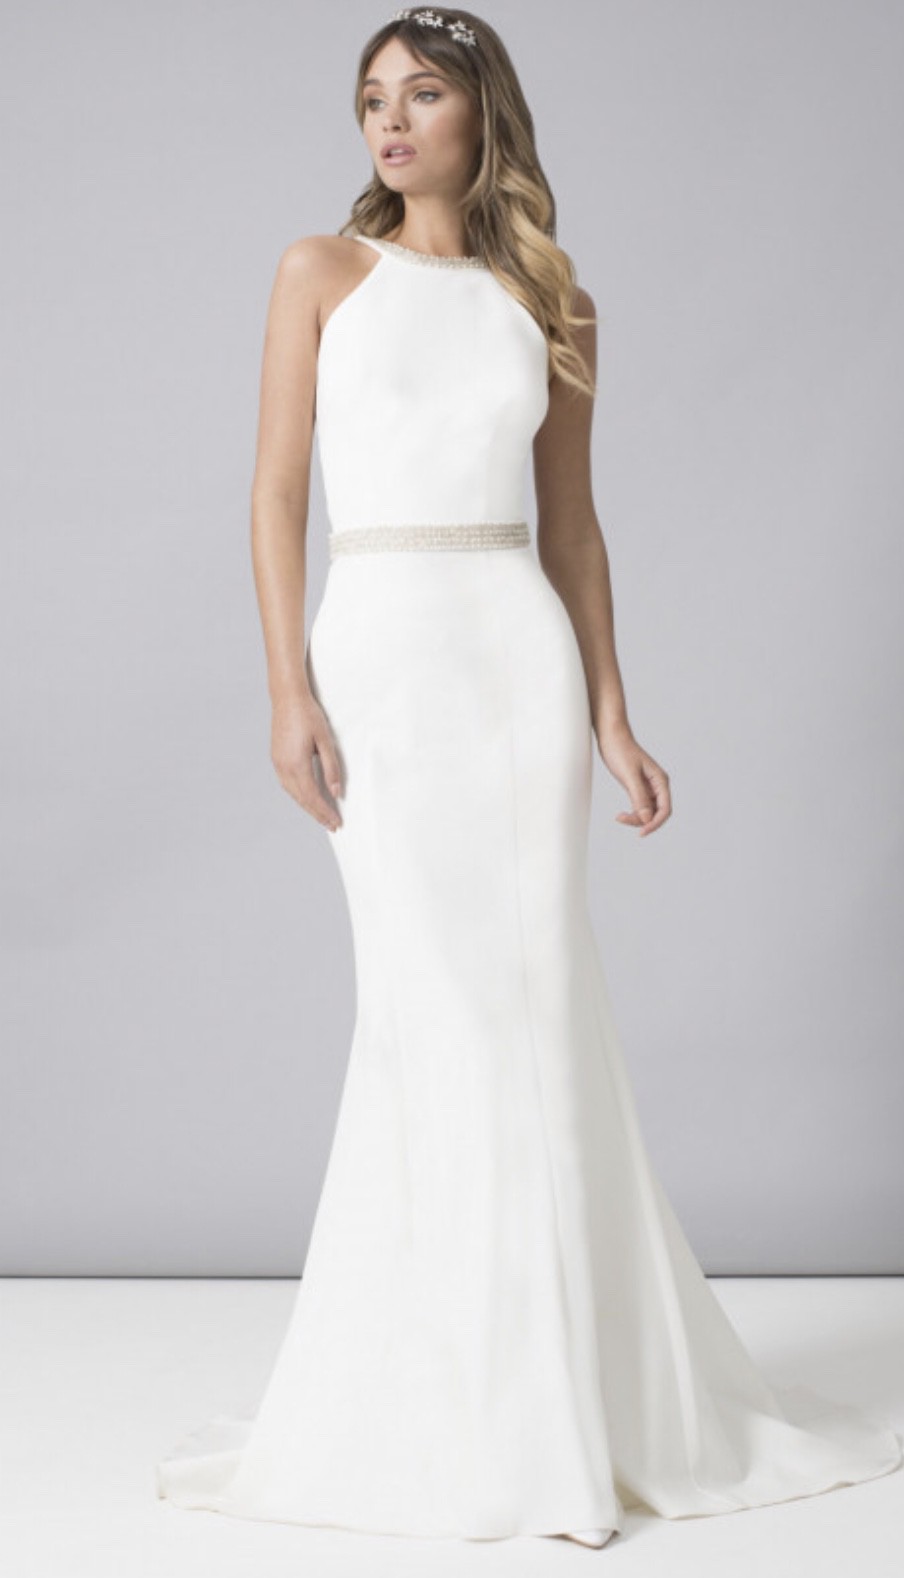 Chichi London Wedding Dress Hotsell, 53% OFF | www.ingeniovirtual.com